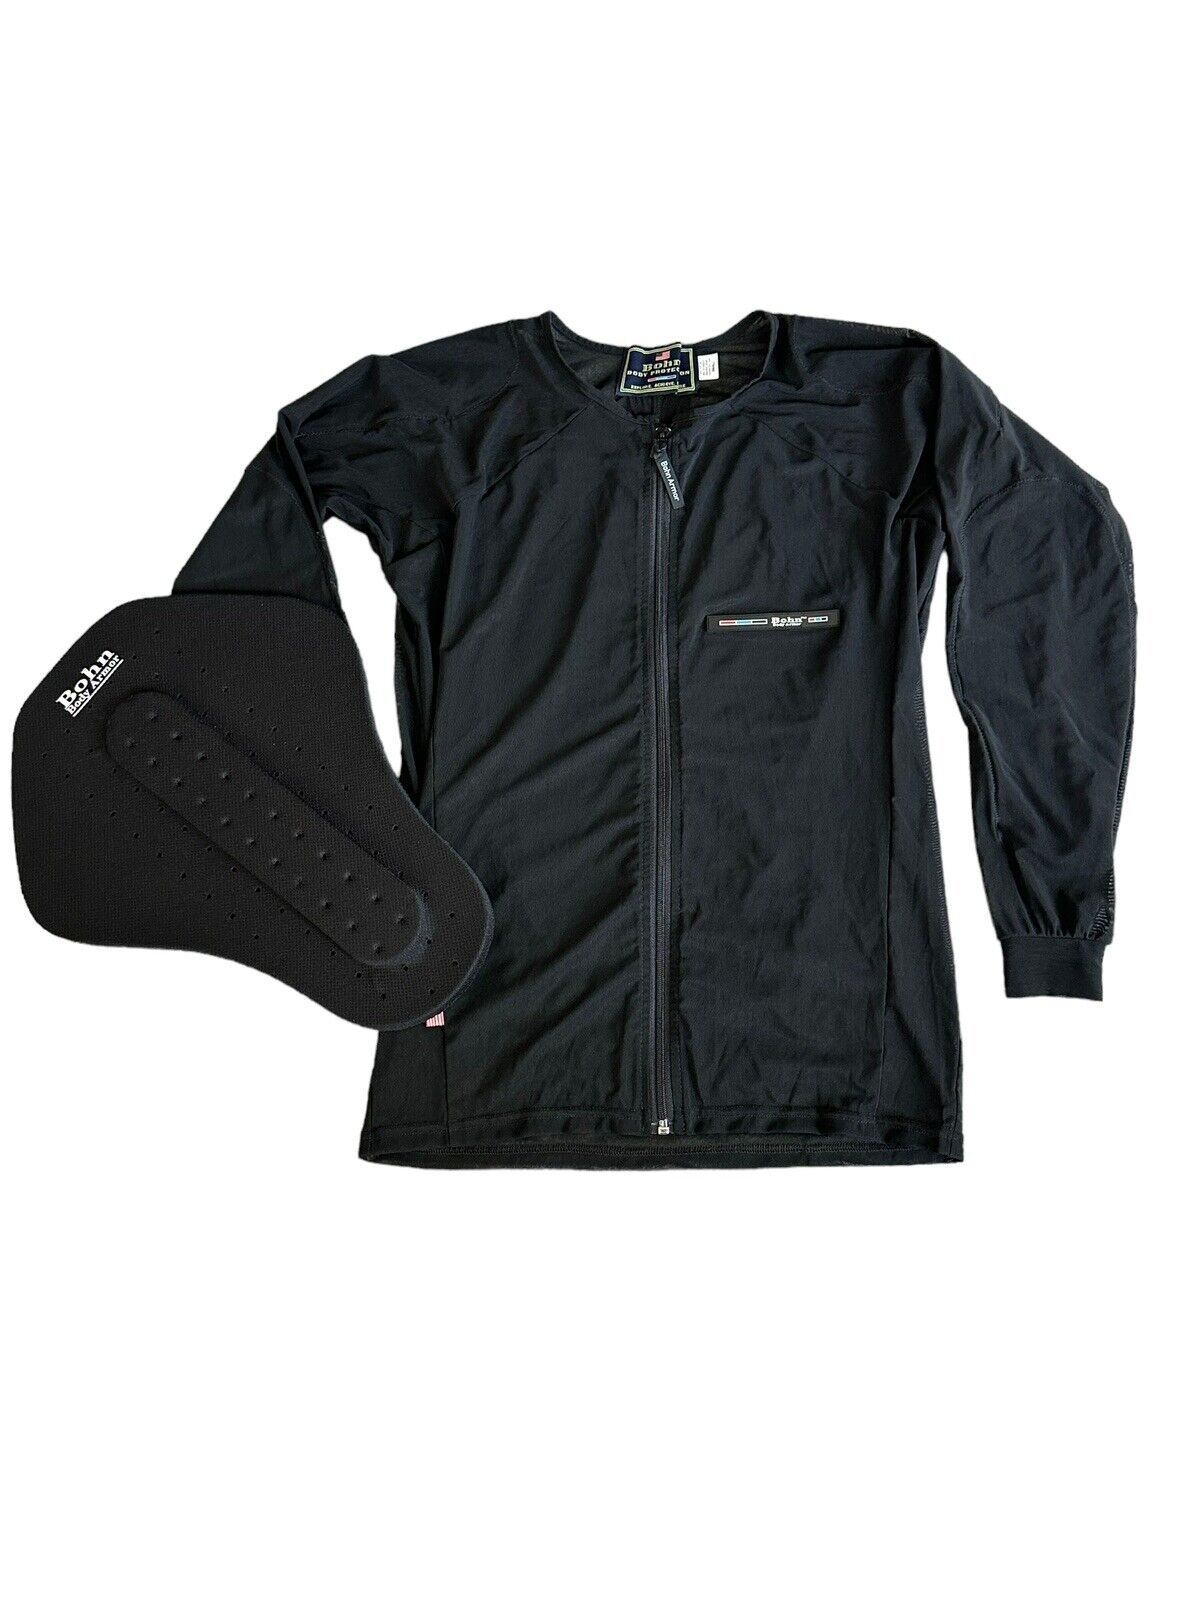 Bohn Body Armor SMALL Full Zip Mesh Padded AirTex L/S Shirt Jacket Back Pad